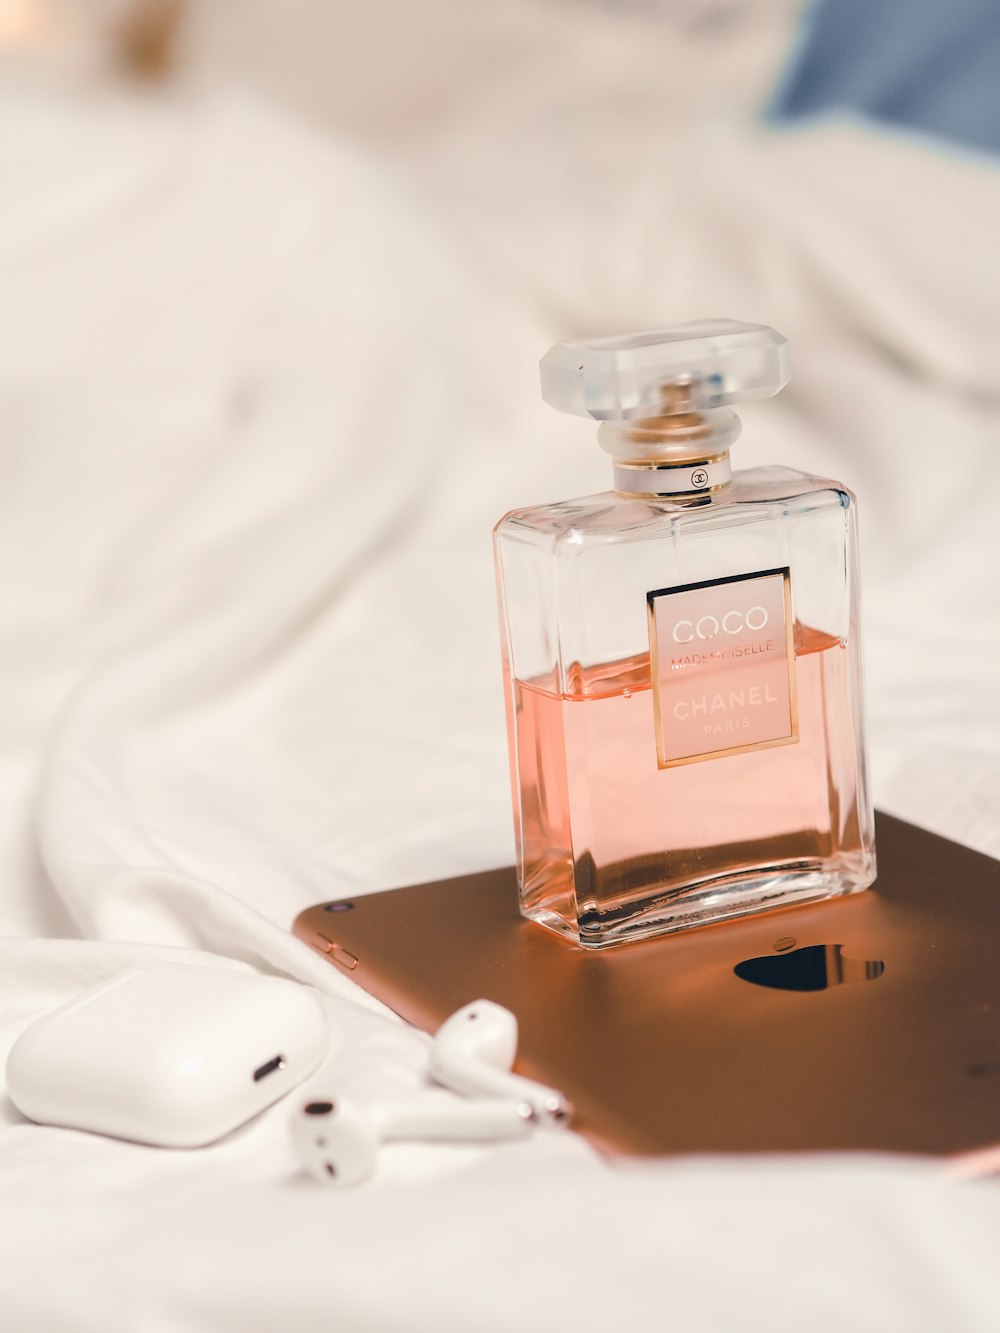 Clear glass perfume bottle on white textile photo – Free